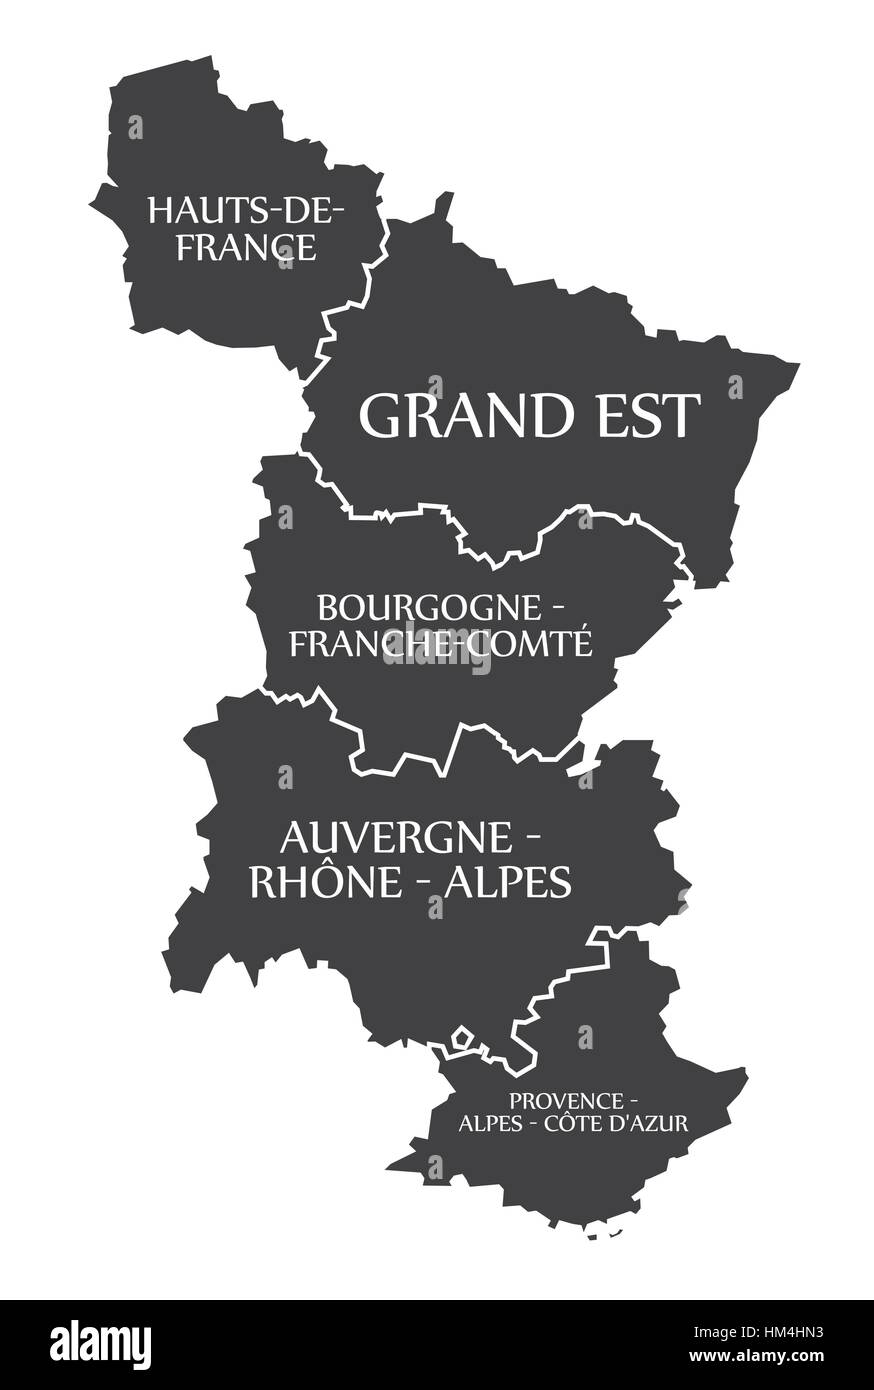 Hauts-de-France - Grand Est - Bourgogne - Auvergne - Provence Map France illustration Stock Vector